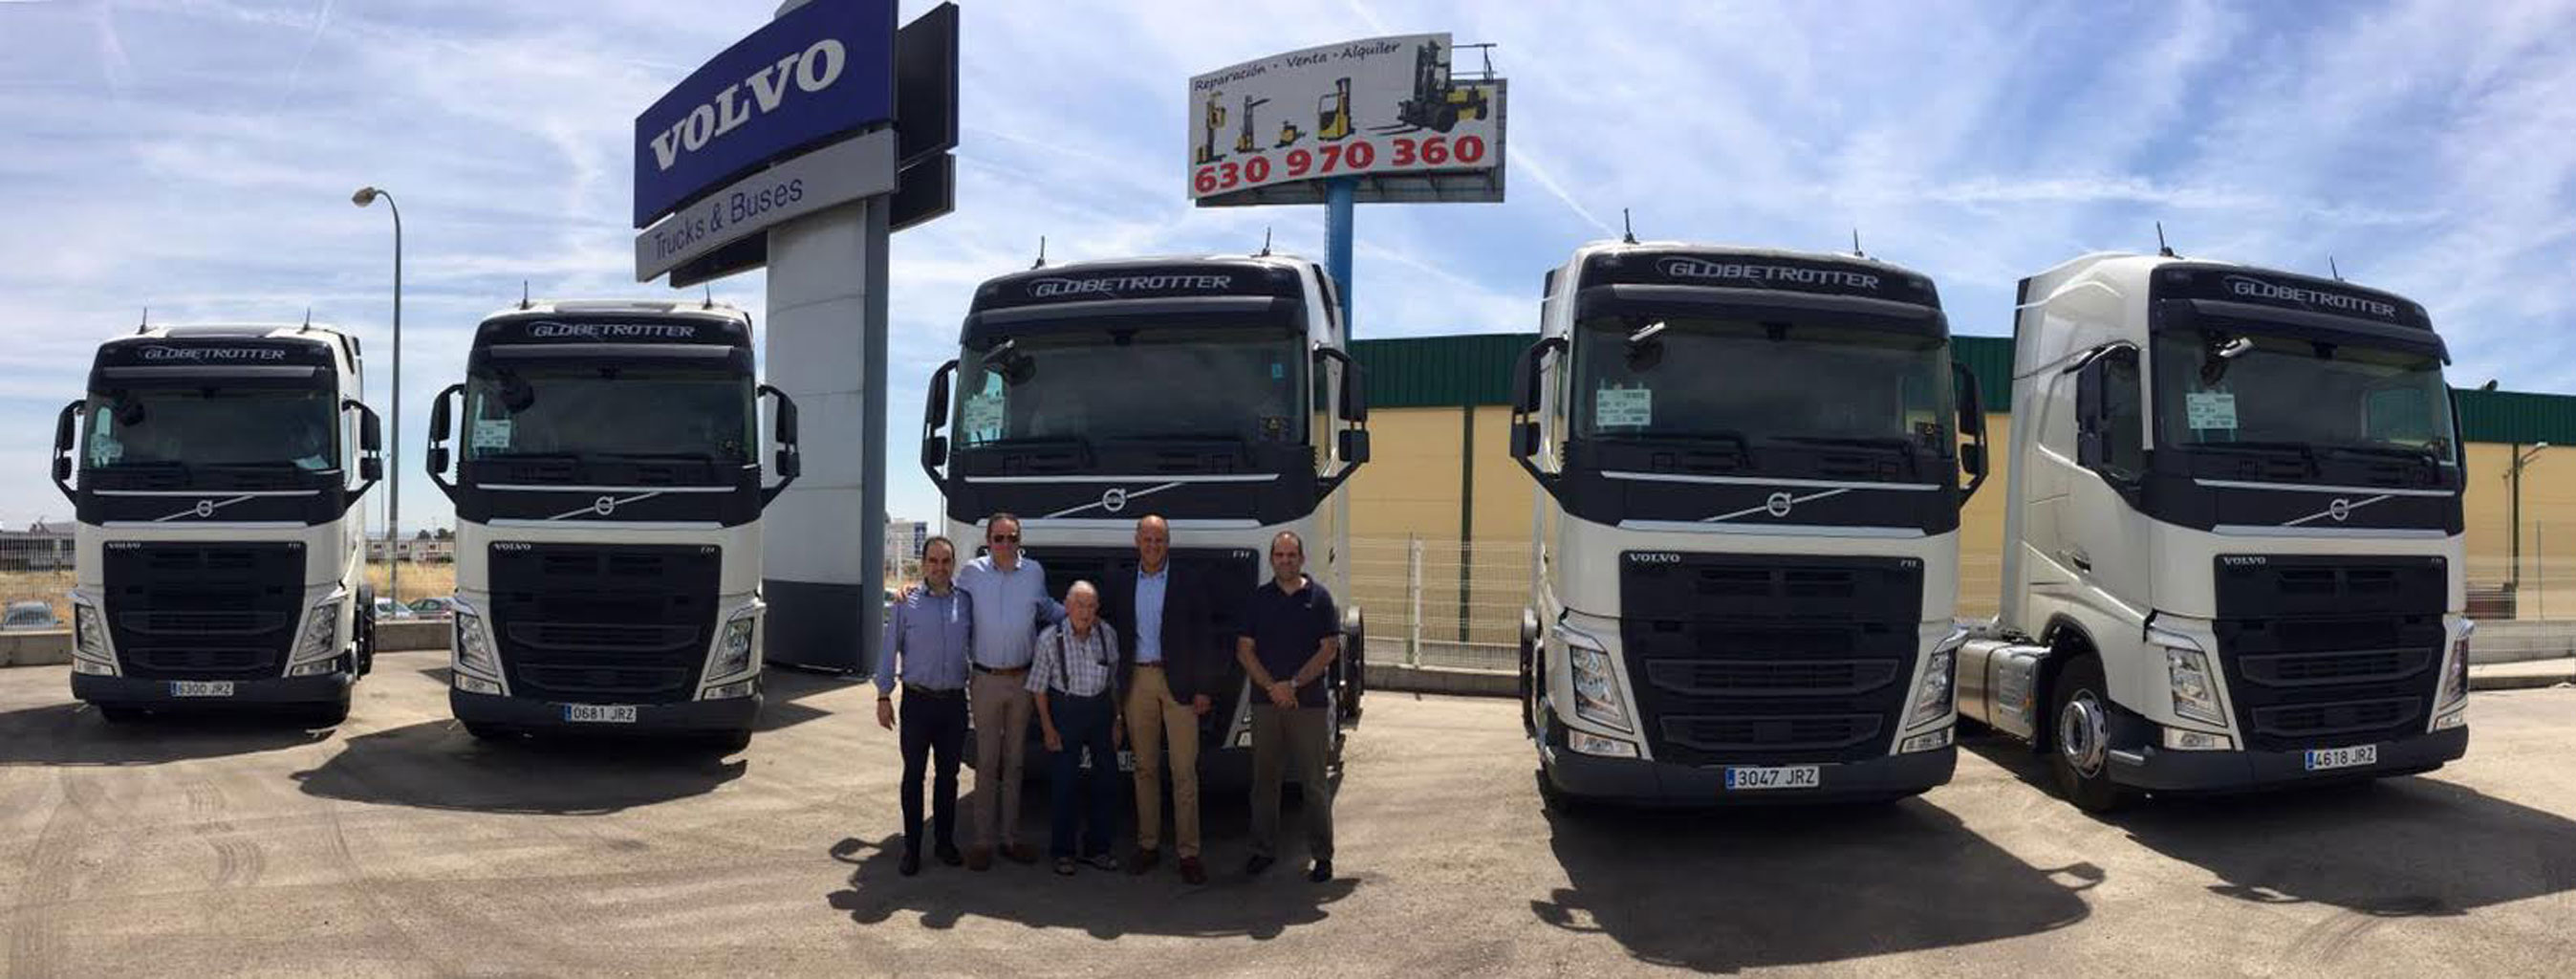 Volvo Trucks Avitrans Urgente